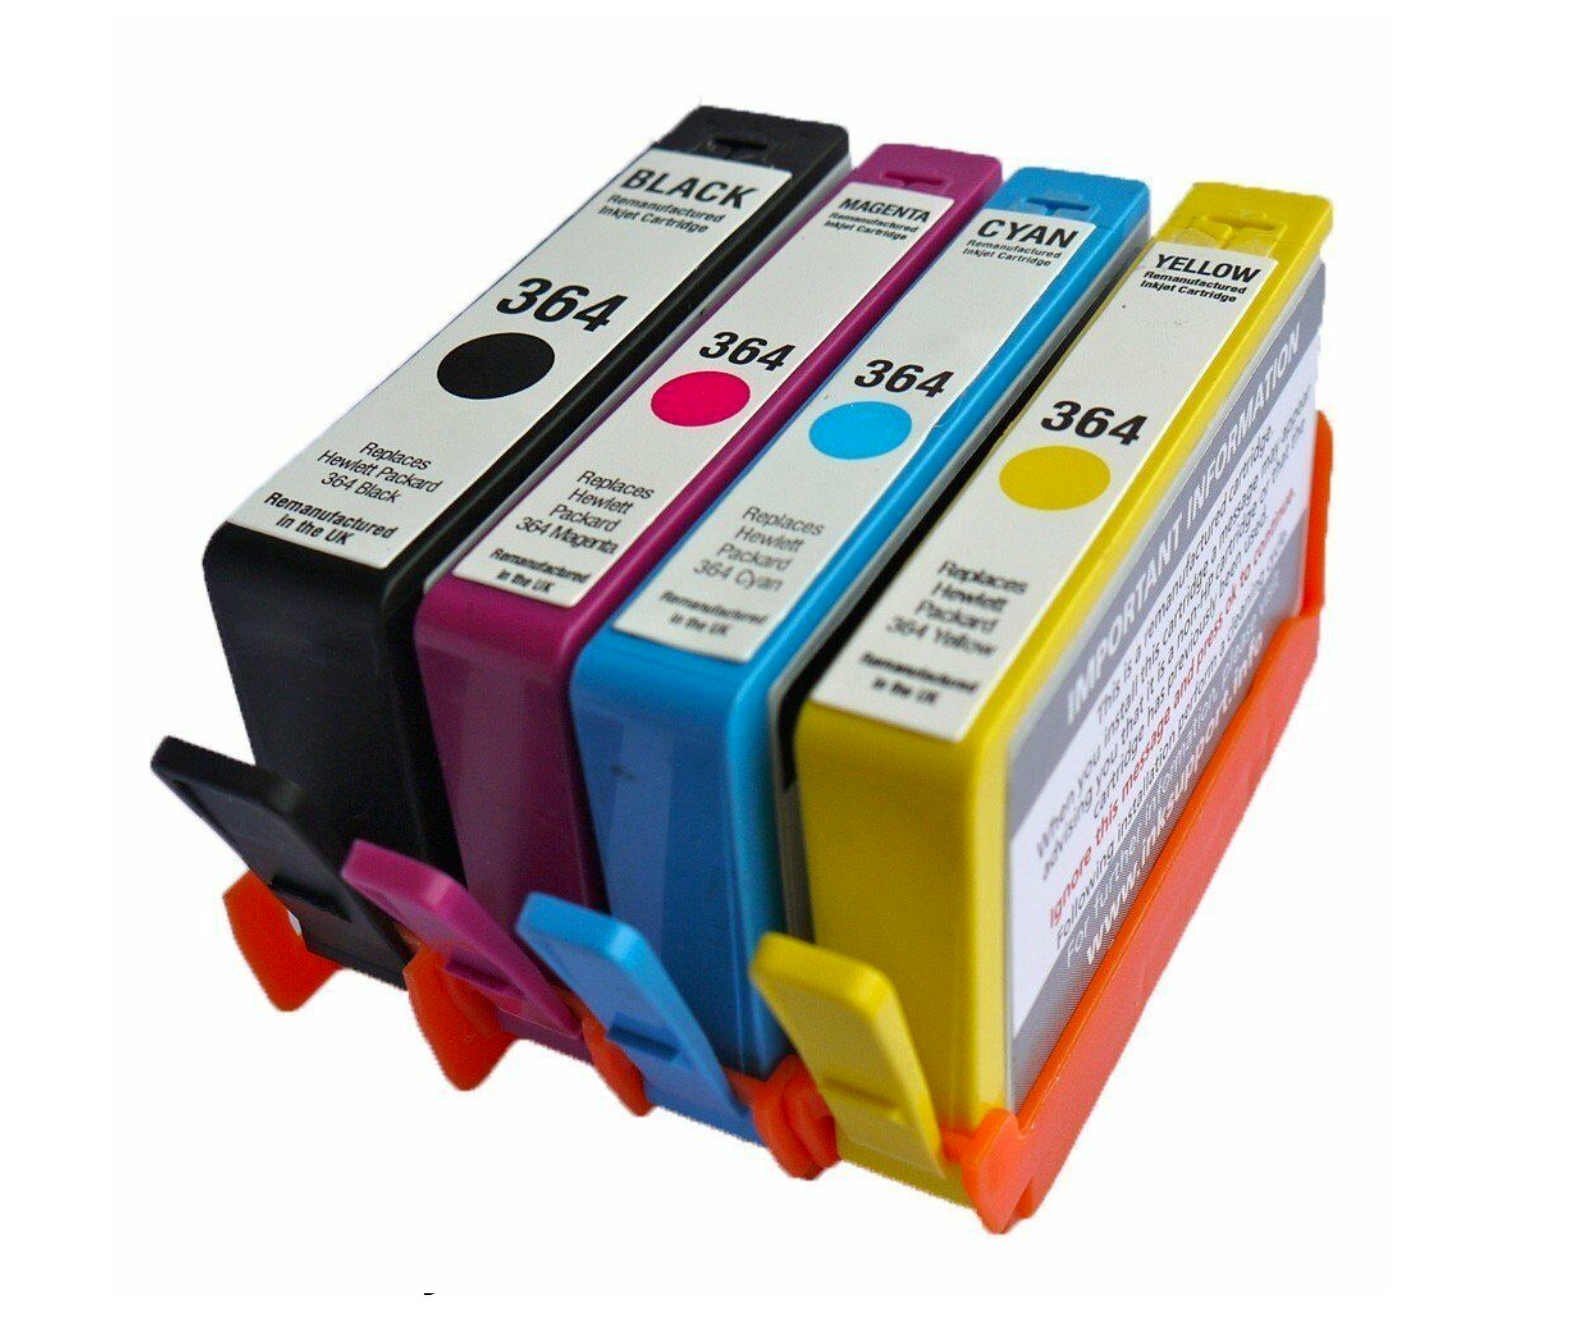 Non-OEM HP 364XL CMYK Ink Cartridges For HP Photosmart 5520 6510 Printer | eBay